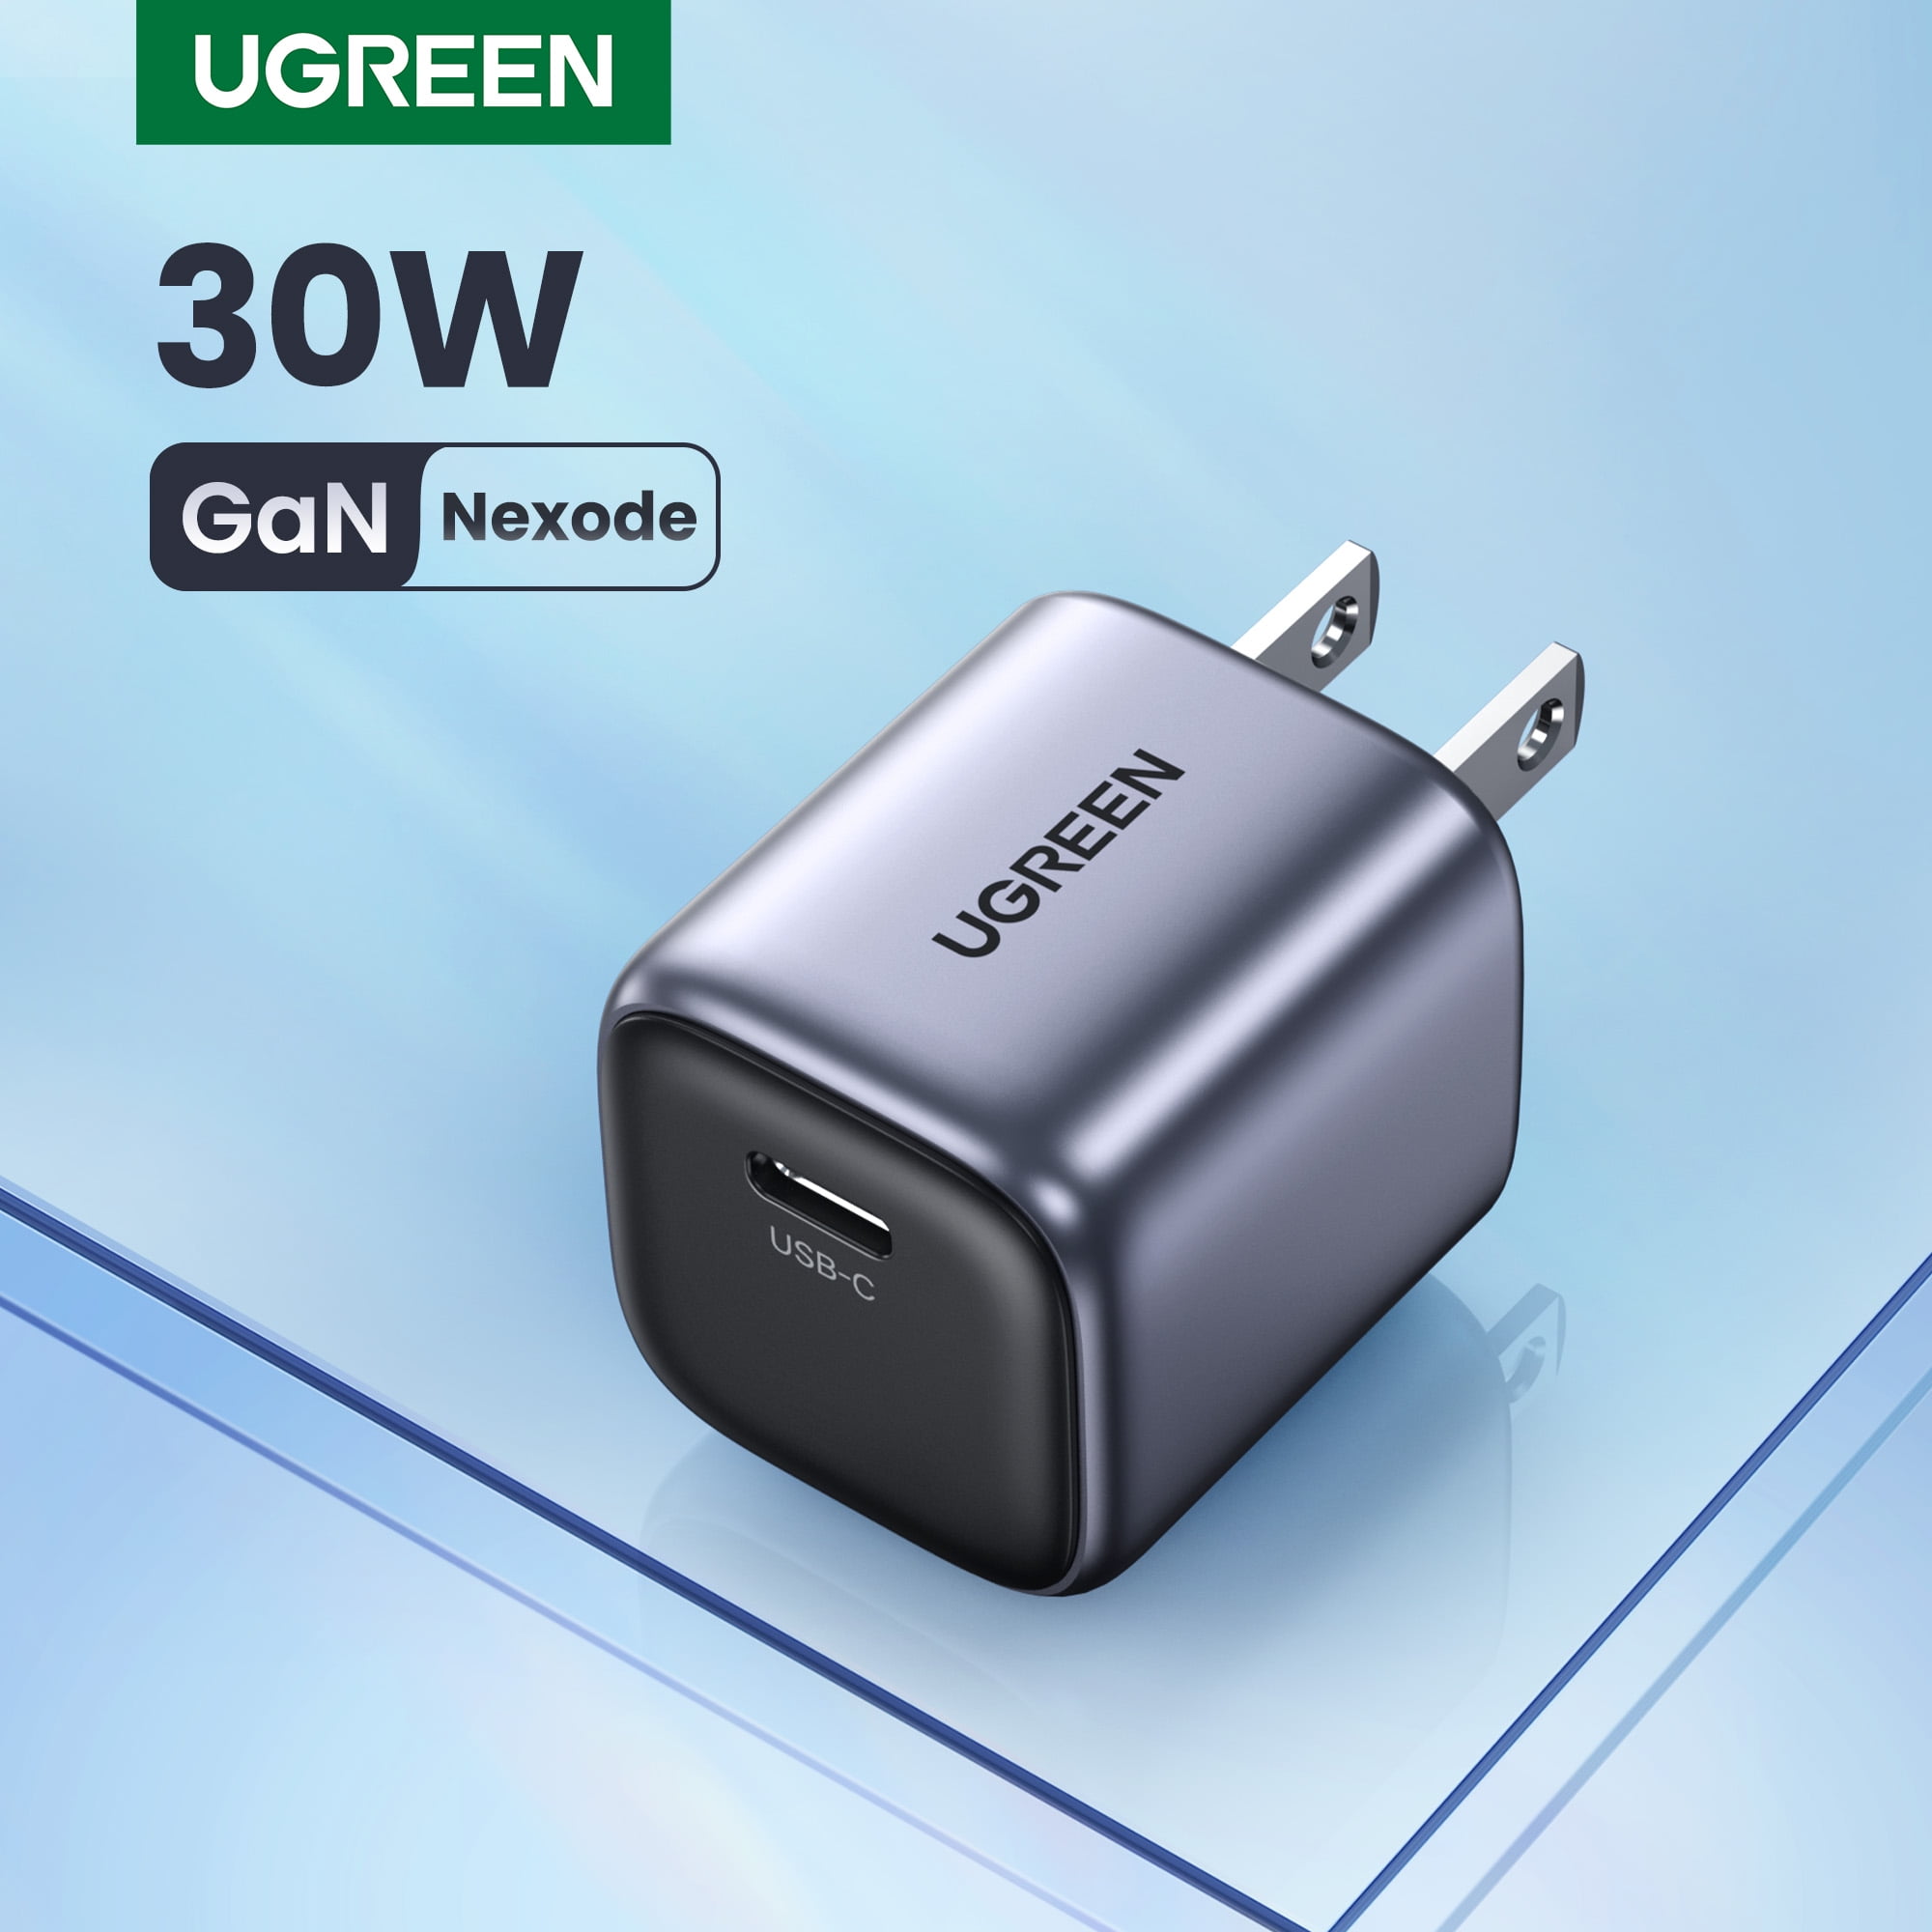 UGREEN Nexode Chargeur 30W USB C avec GaN Tech Compatible avec